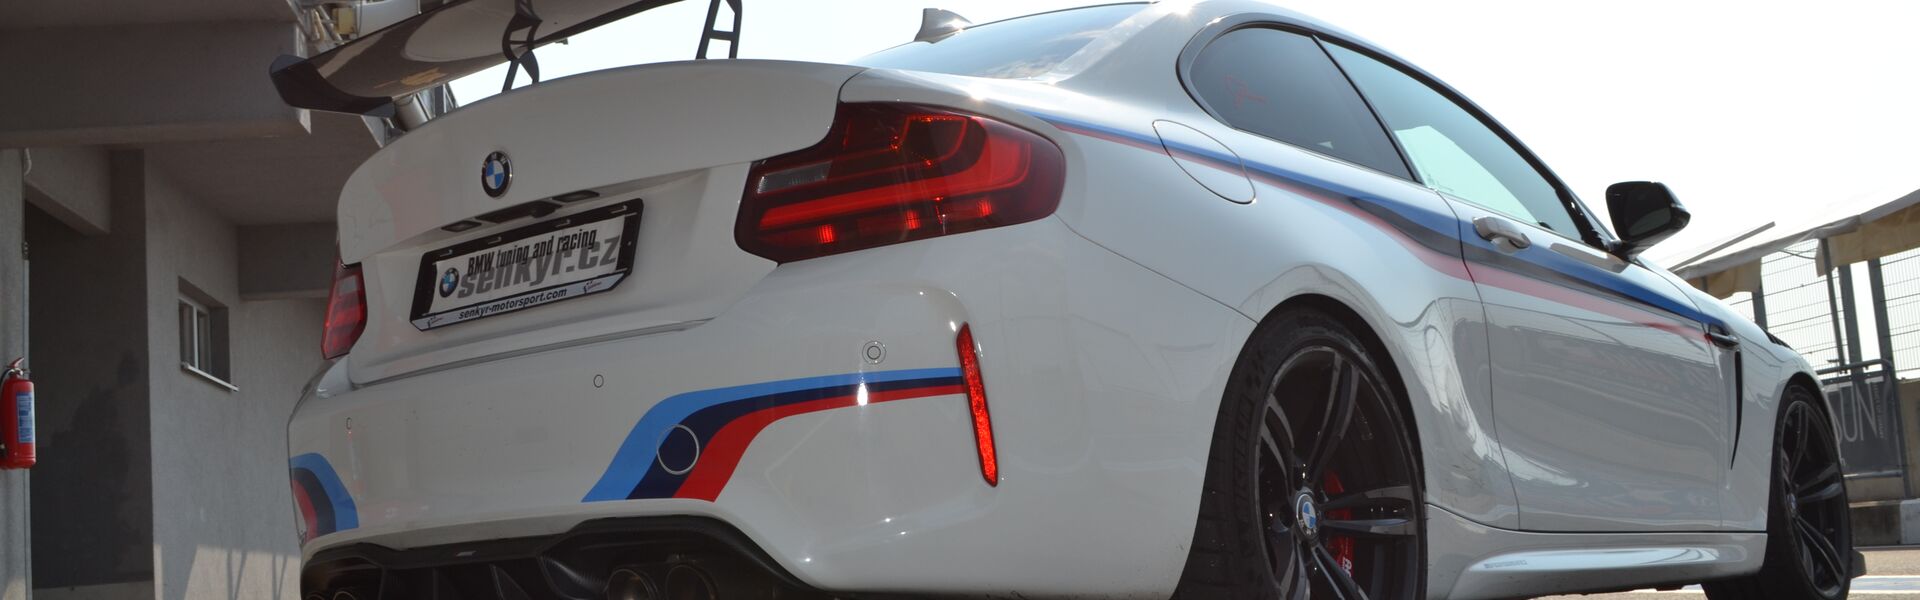 Bodykit/ Aerodynamic elements BMW M3 E36